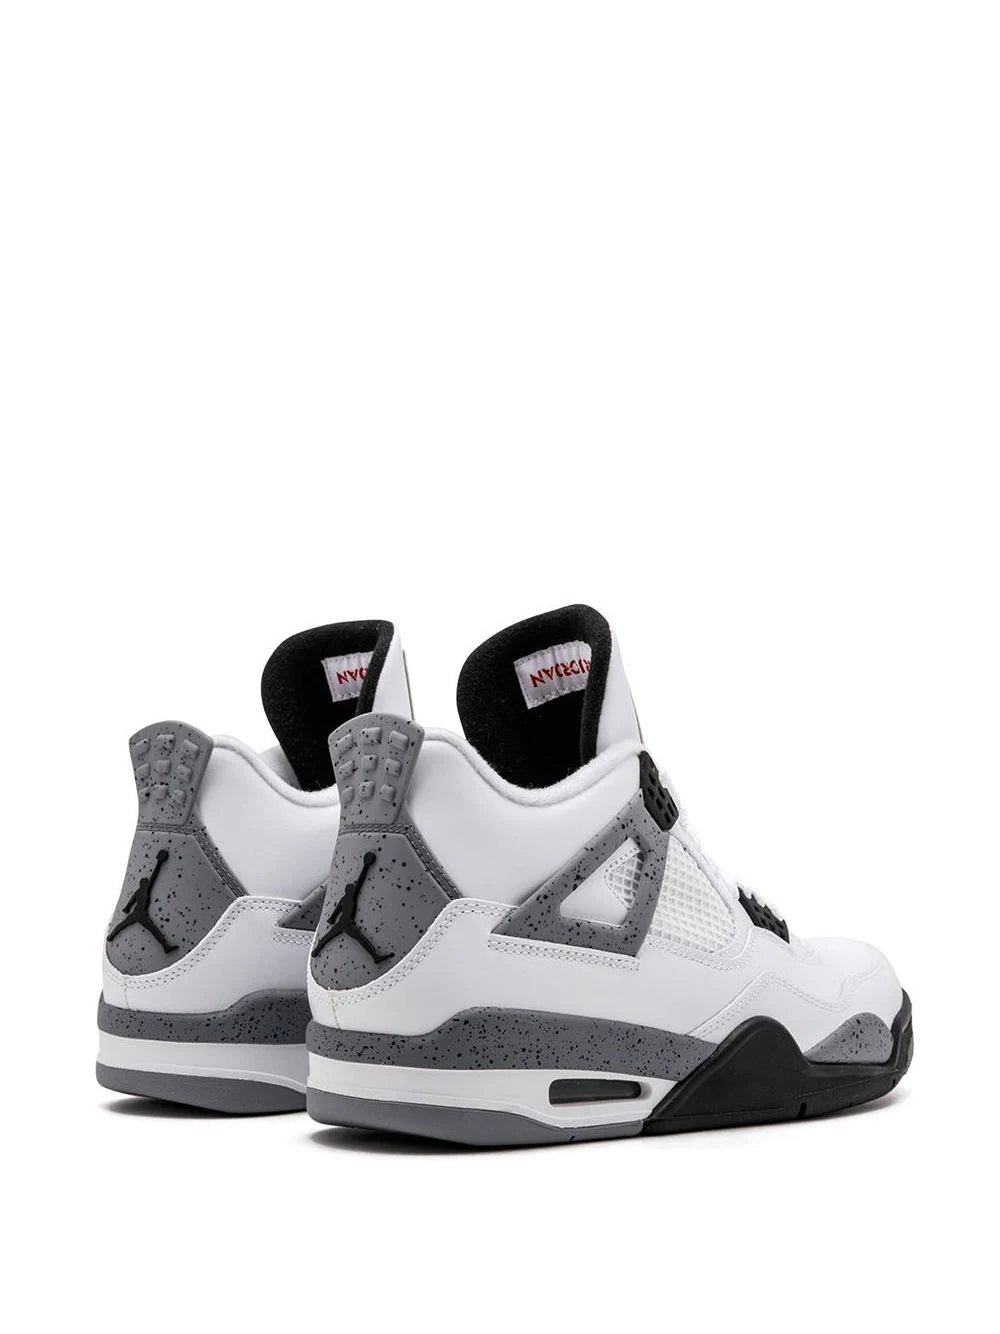 Air Jordan Retro 4 White Cement